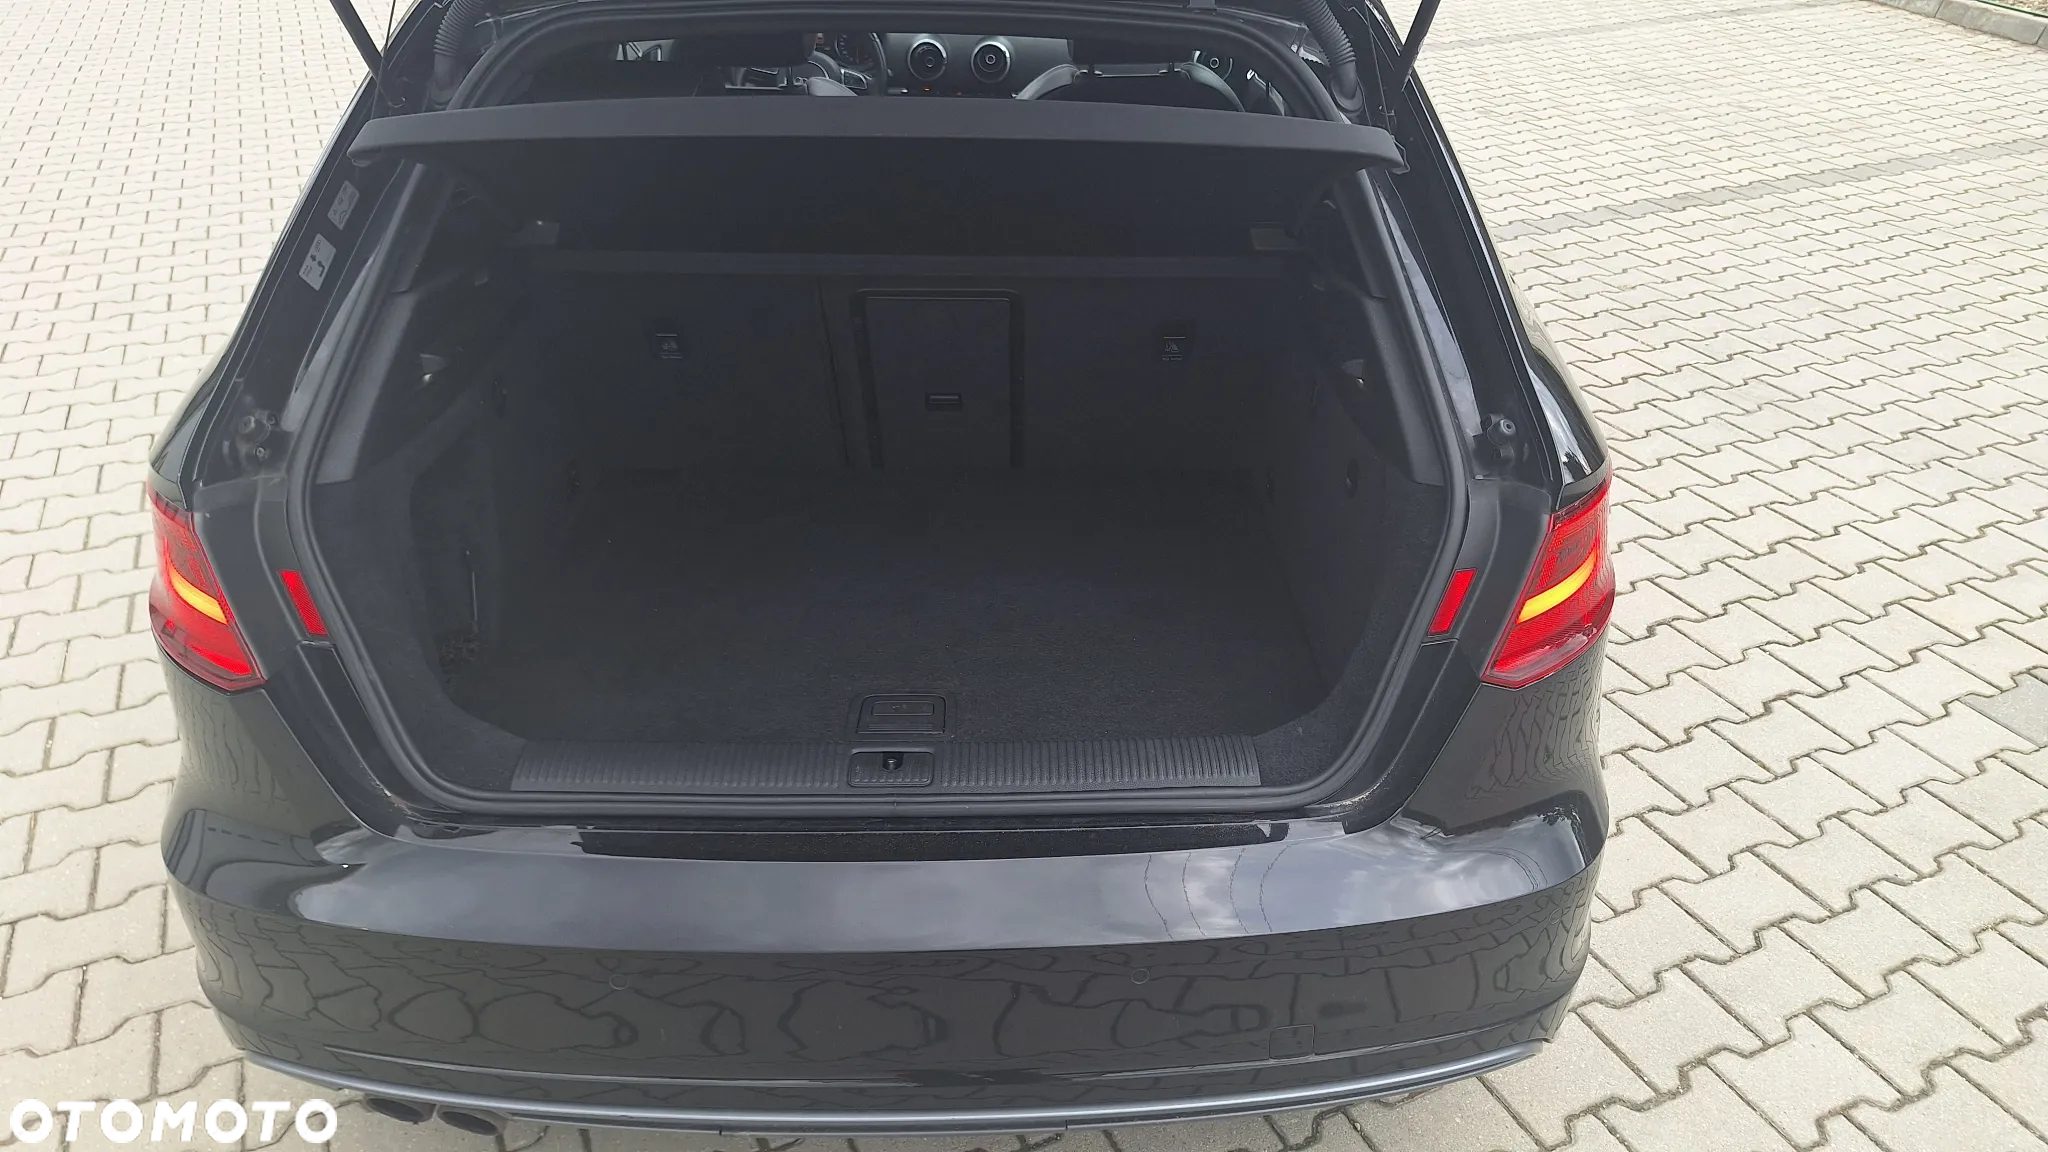 Audi A3 2.0 TDI Sportback (clean diesel) quattro S tronic S line Sportpaket - 3